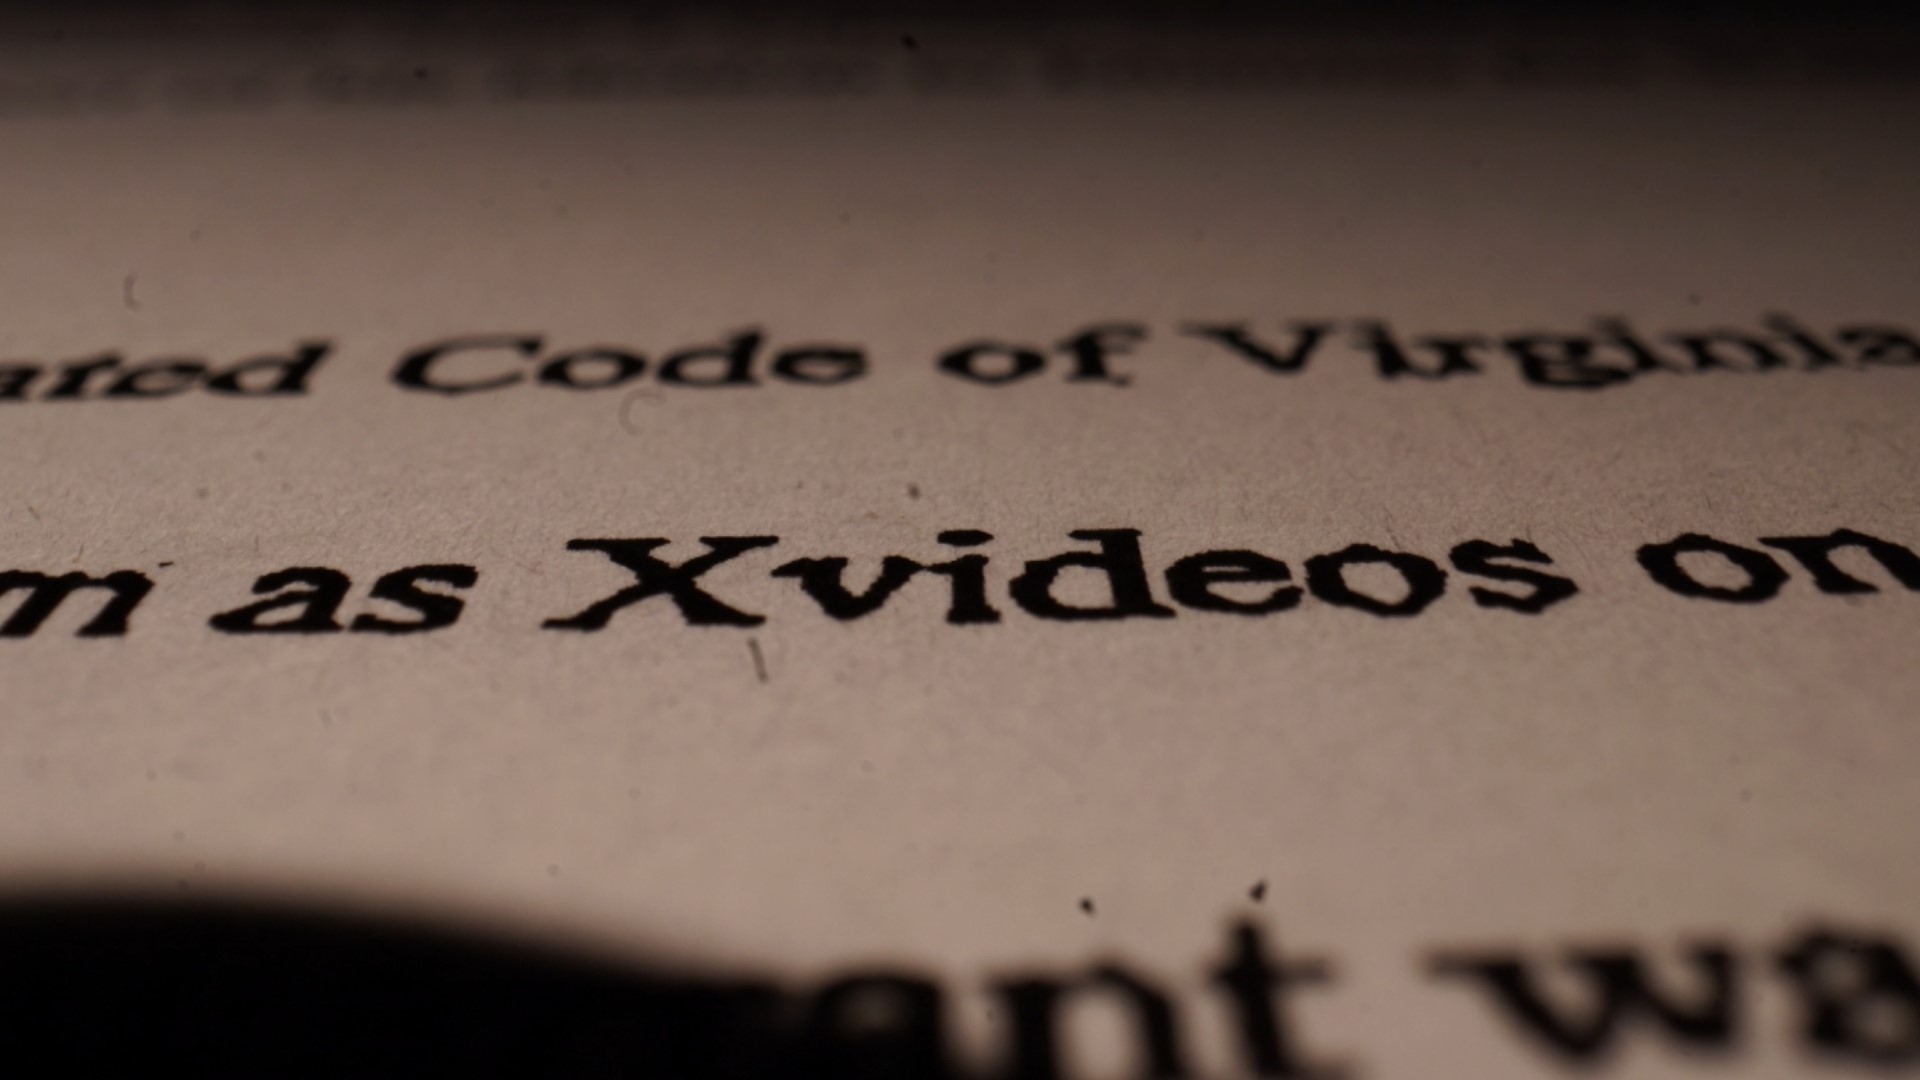 Xxxvidioporno Com - Revenge porn case dismissed after statute of limitations passed | wusa9.com